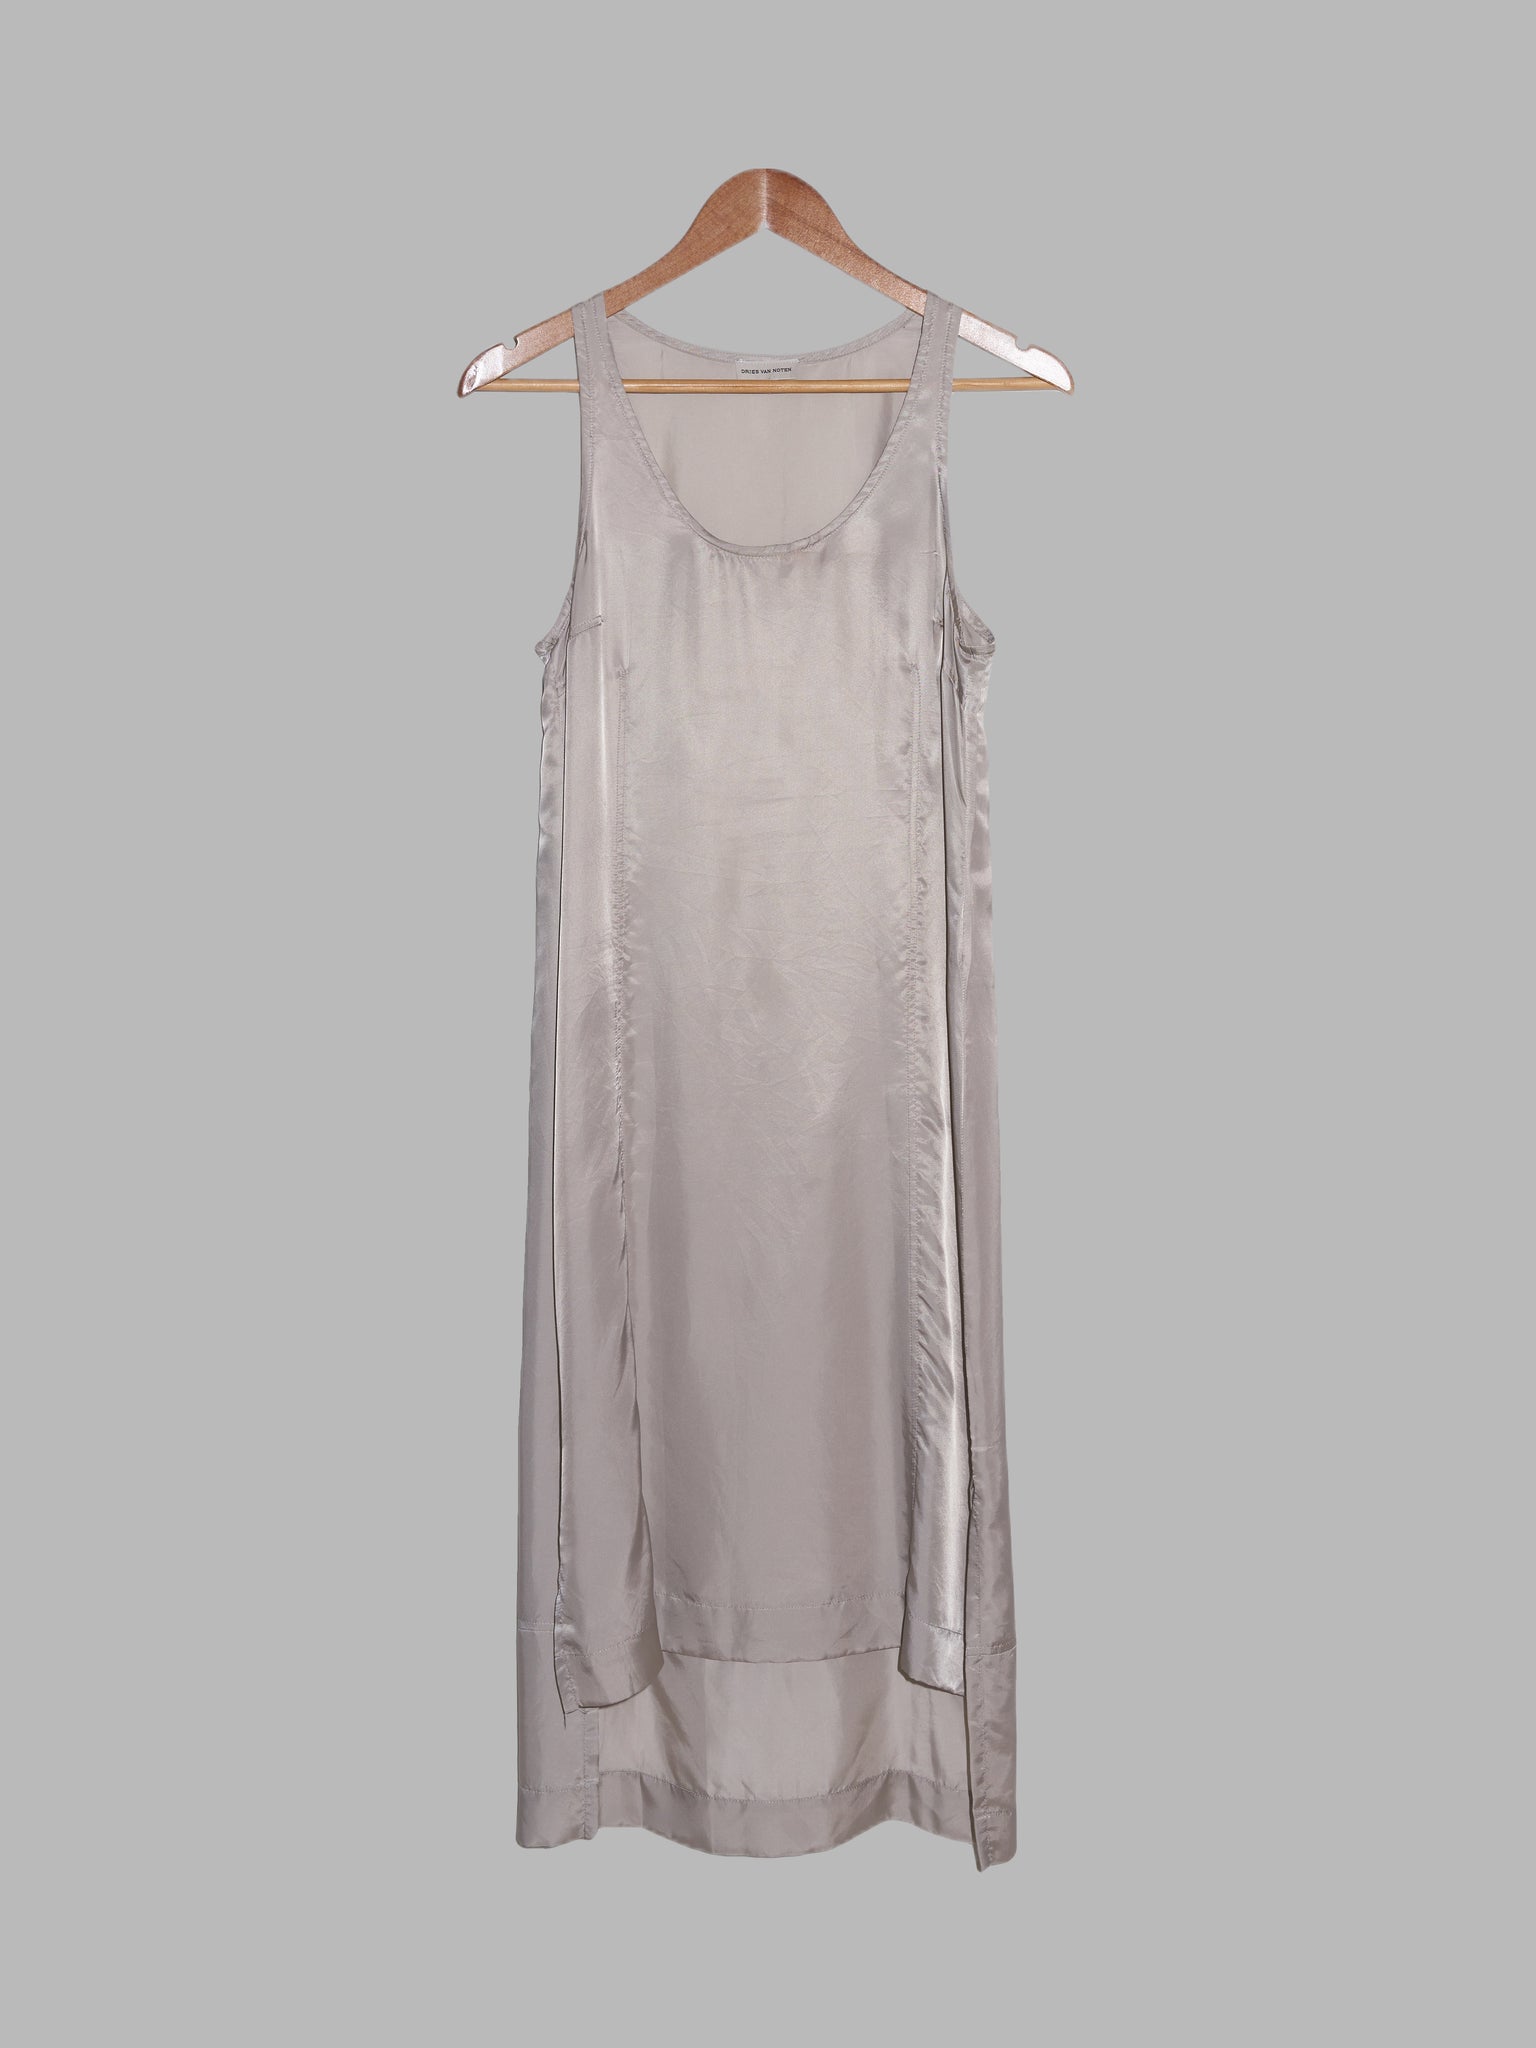 Dries van Noten grey cupra satin sleeveless slip dress - size 36